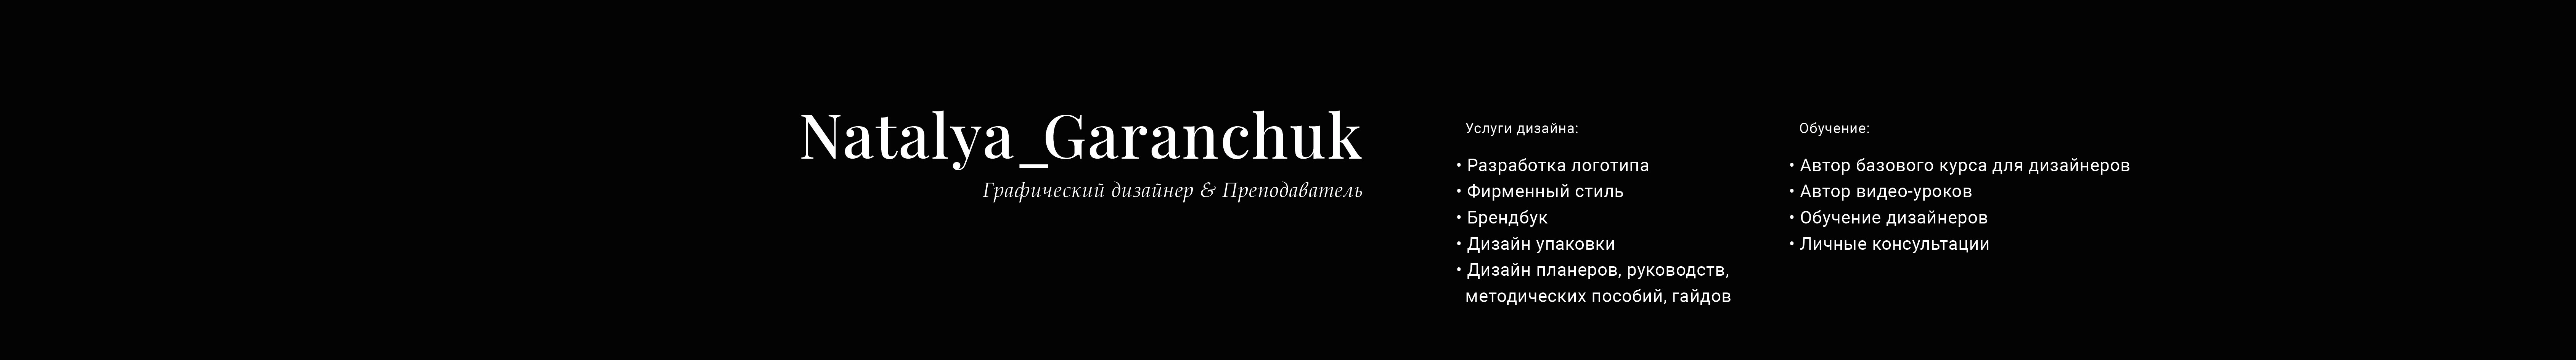 Natalia Garanchuk's profile banner